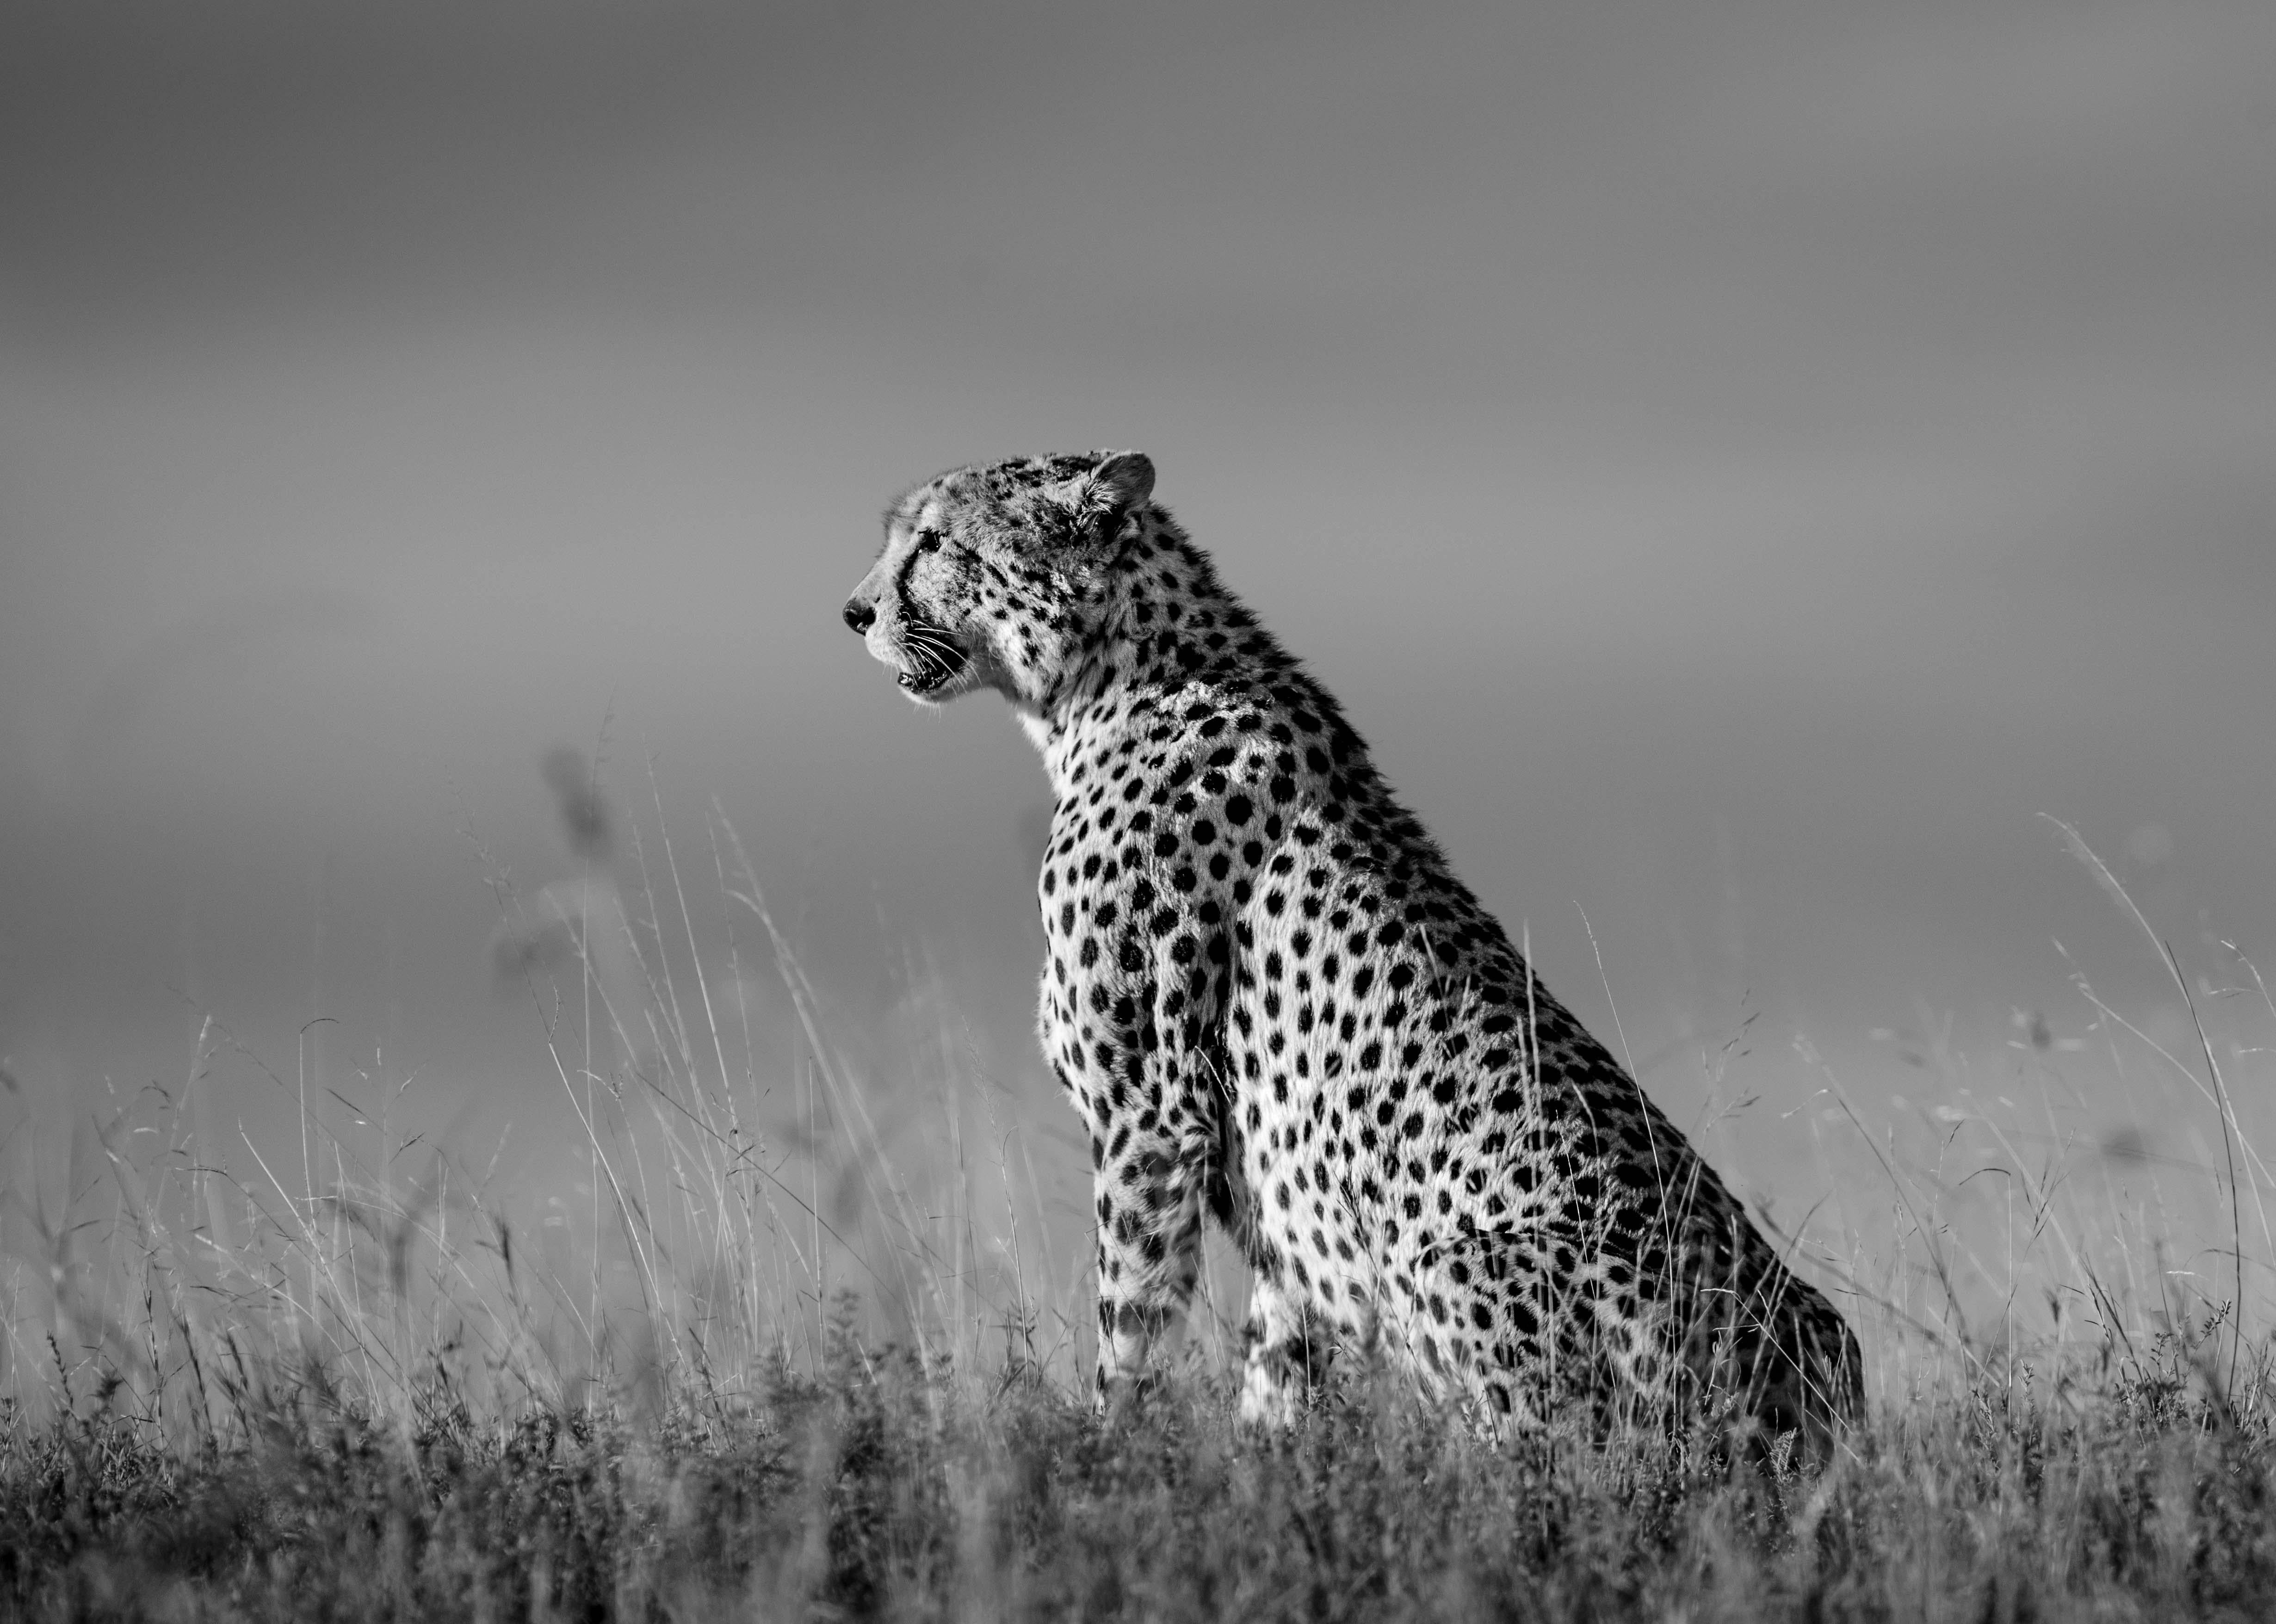 James Lewin Animal Print - On the Look Out, Chyulu Hills, Kenya.